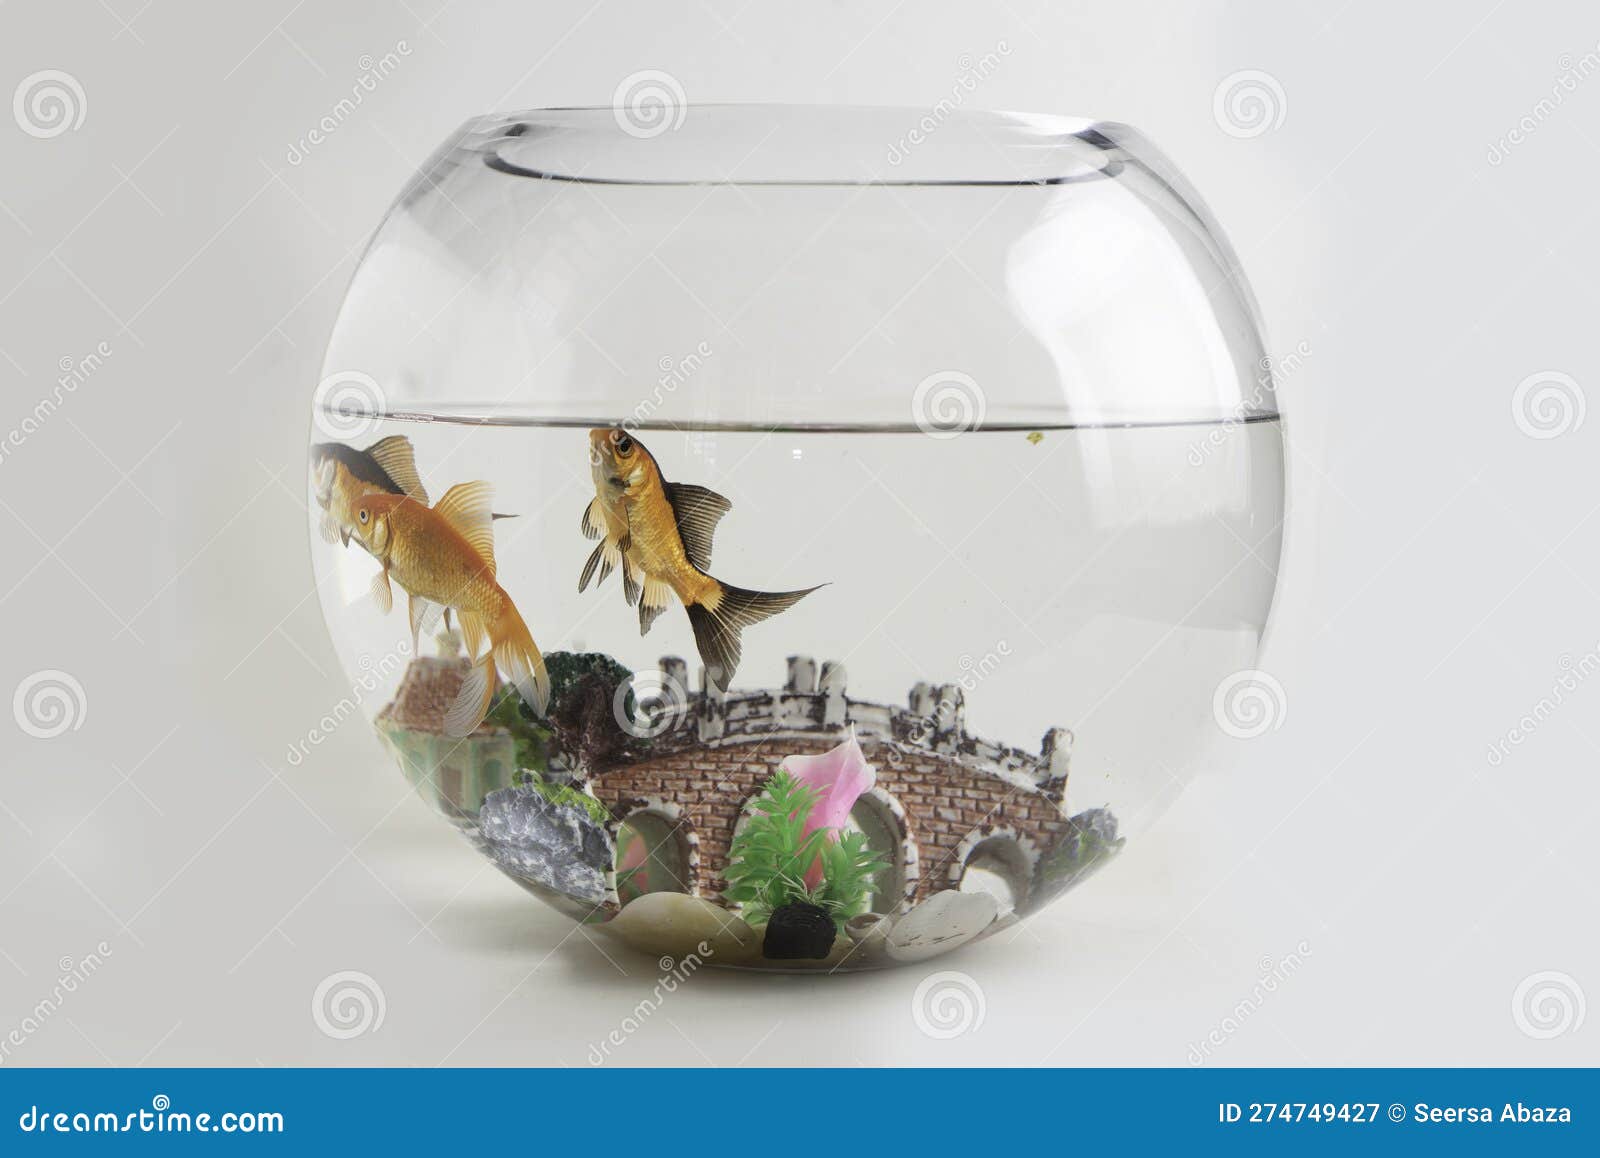 https://thumbs.dreamstime.com/z/gold-fish-tank-simple-classic-aquarium-o-274749427.jpg